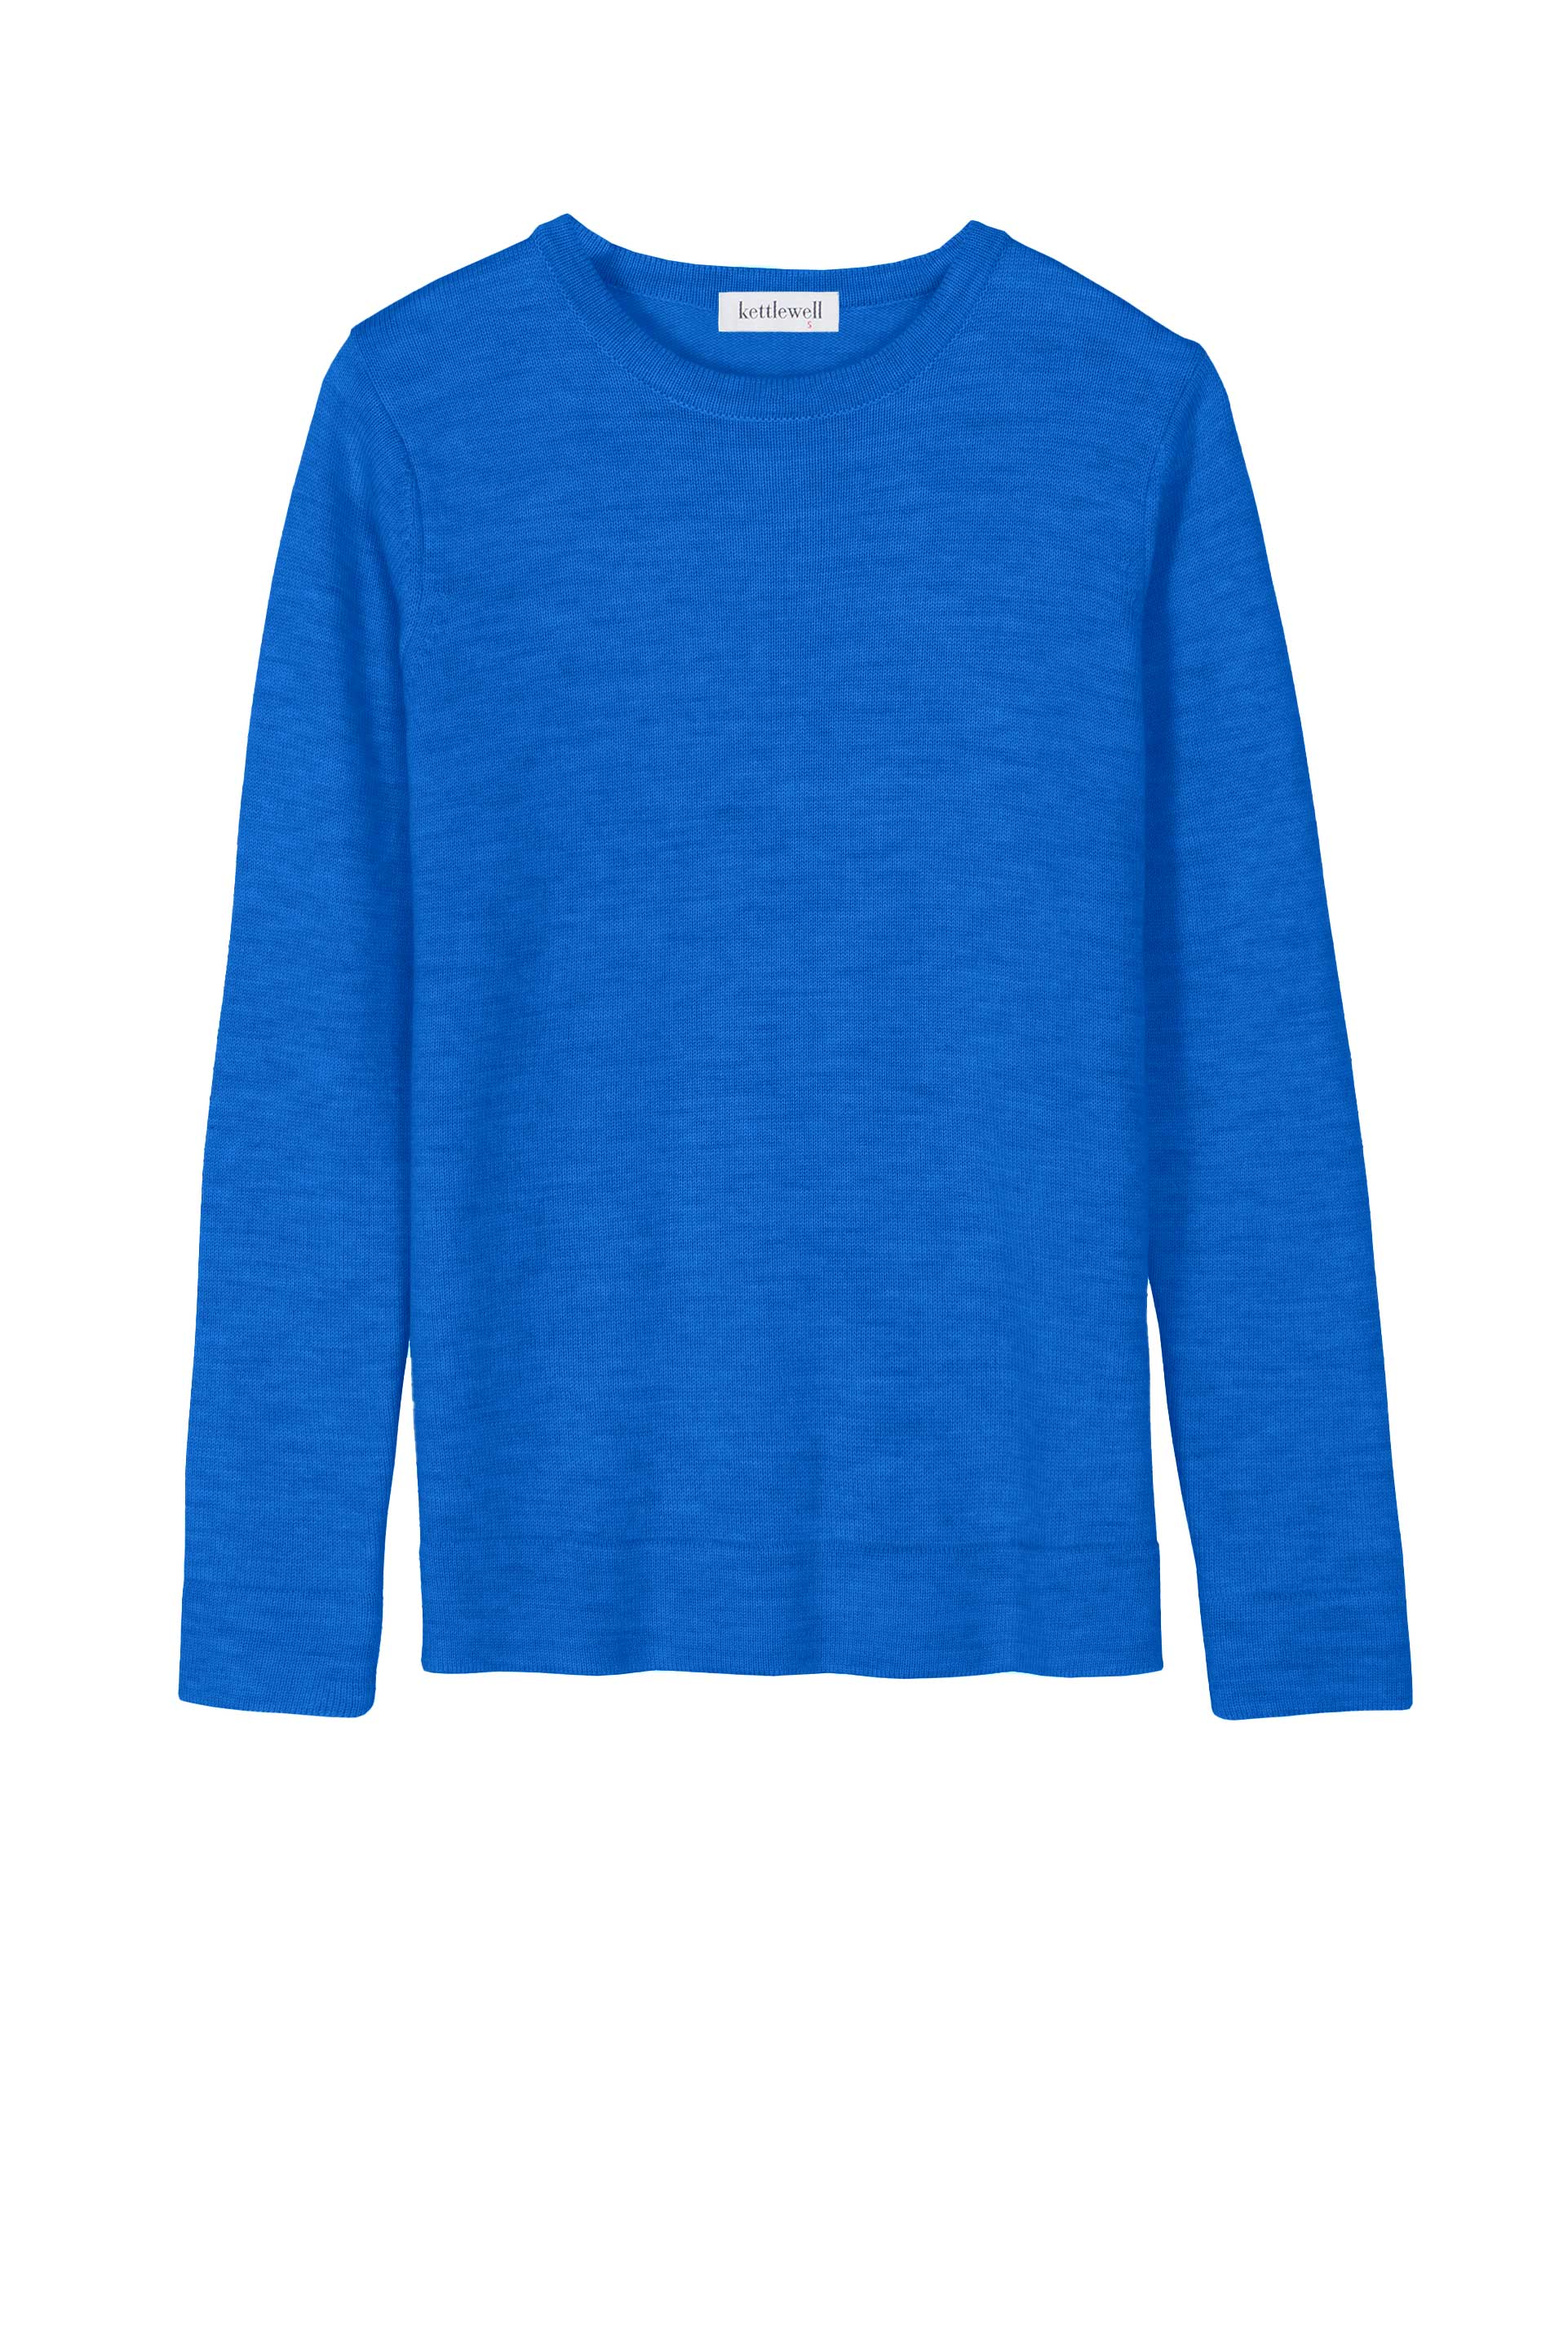 15983_hailey_merino_sweater_cobalt_blue.jpg